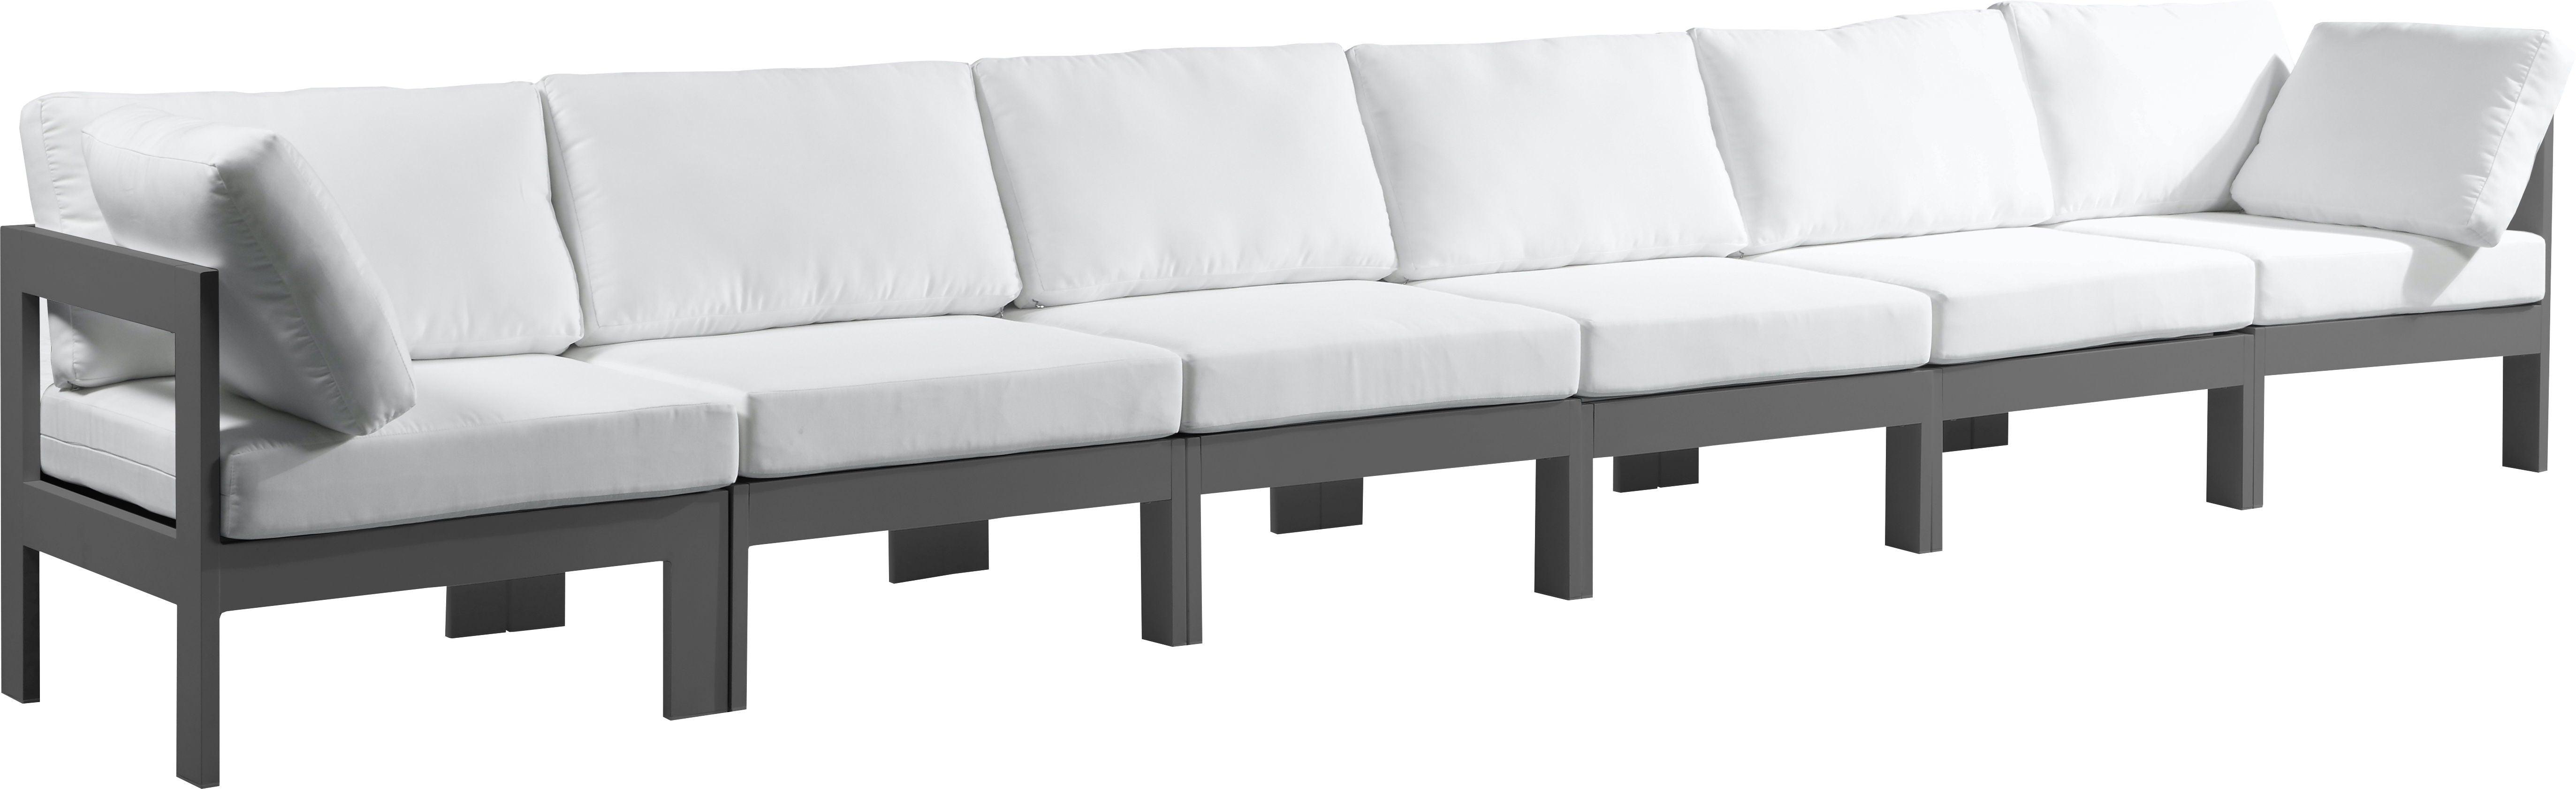 Meridian Furniture - Nizuc - Outdoor Patio Modular Sofa With Frame - White - 5th Avenue Furniture